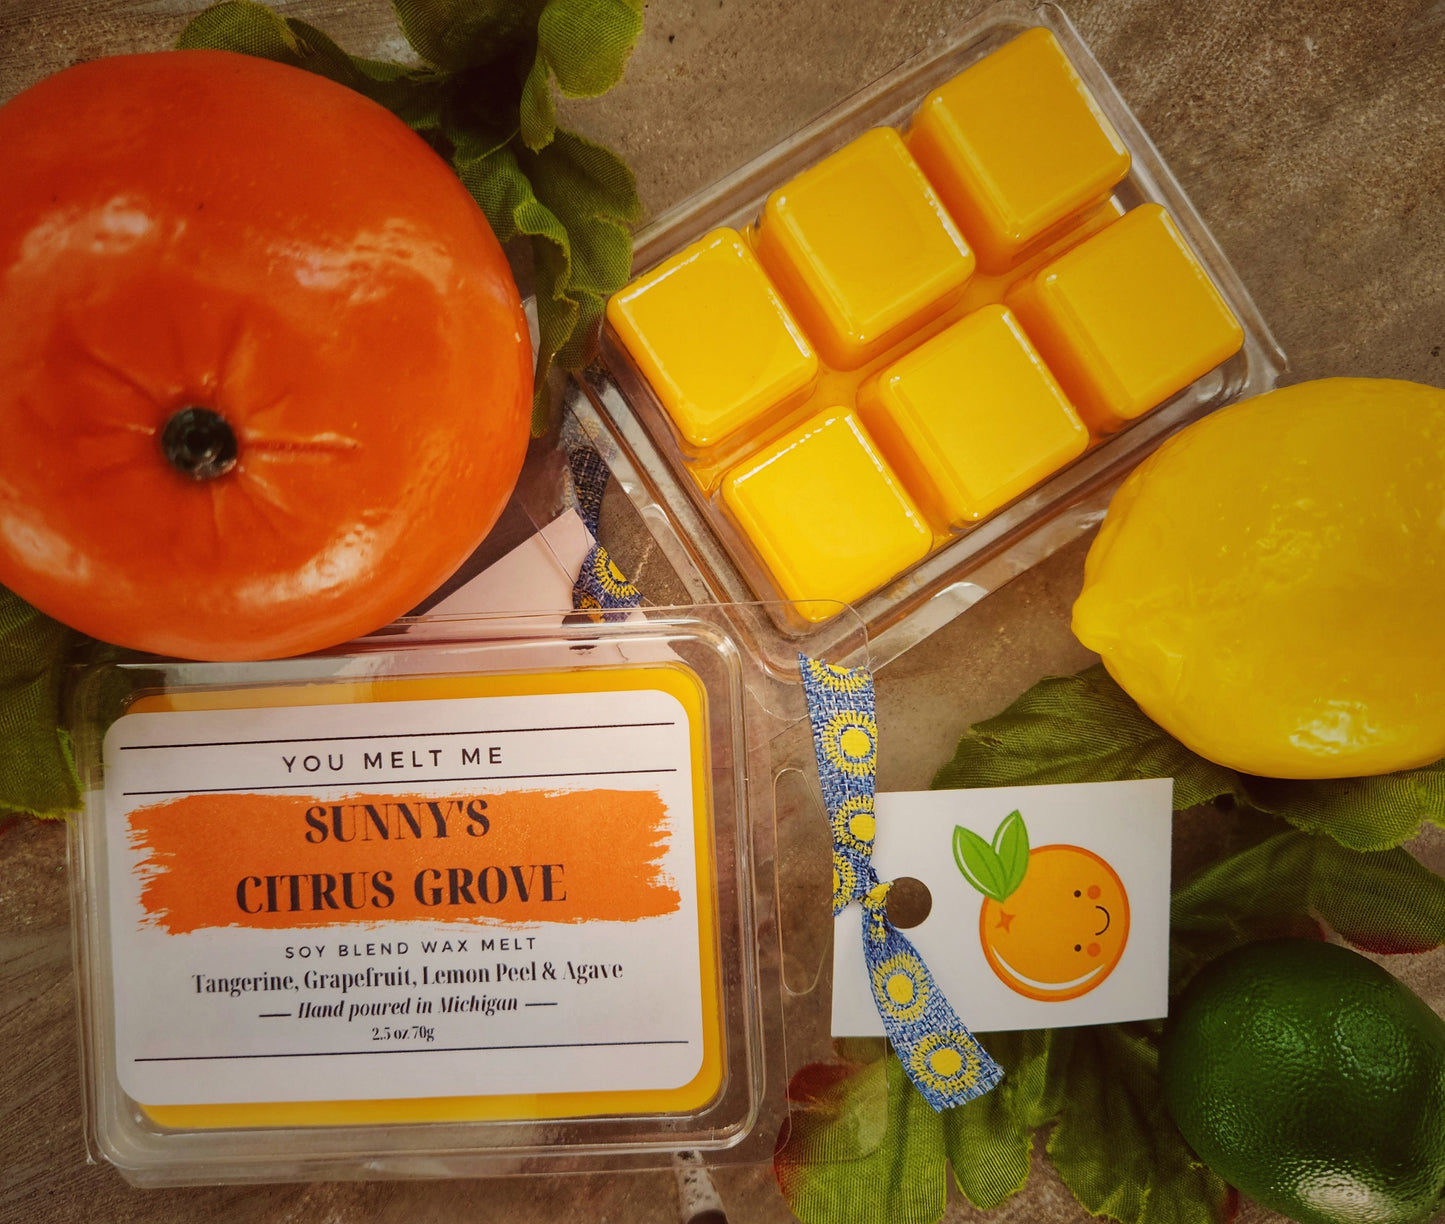 Sunny's Citrus Grove